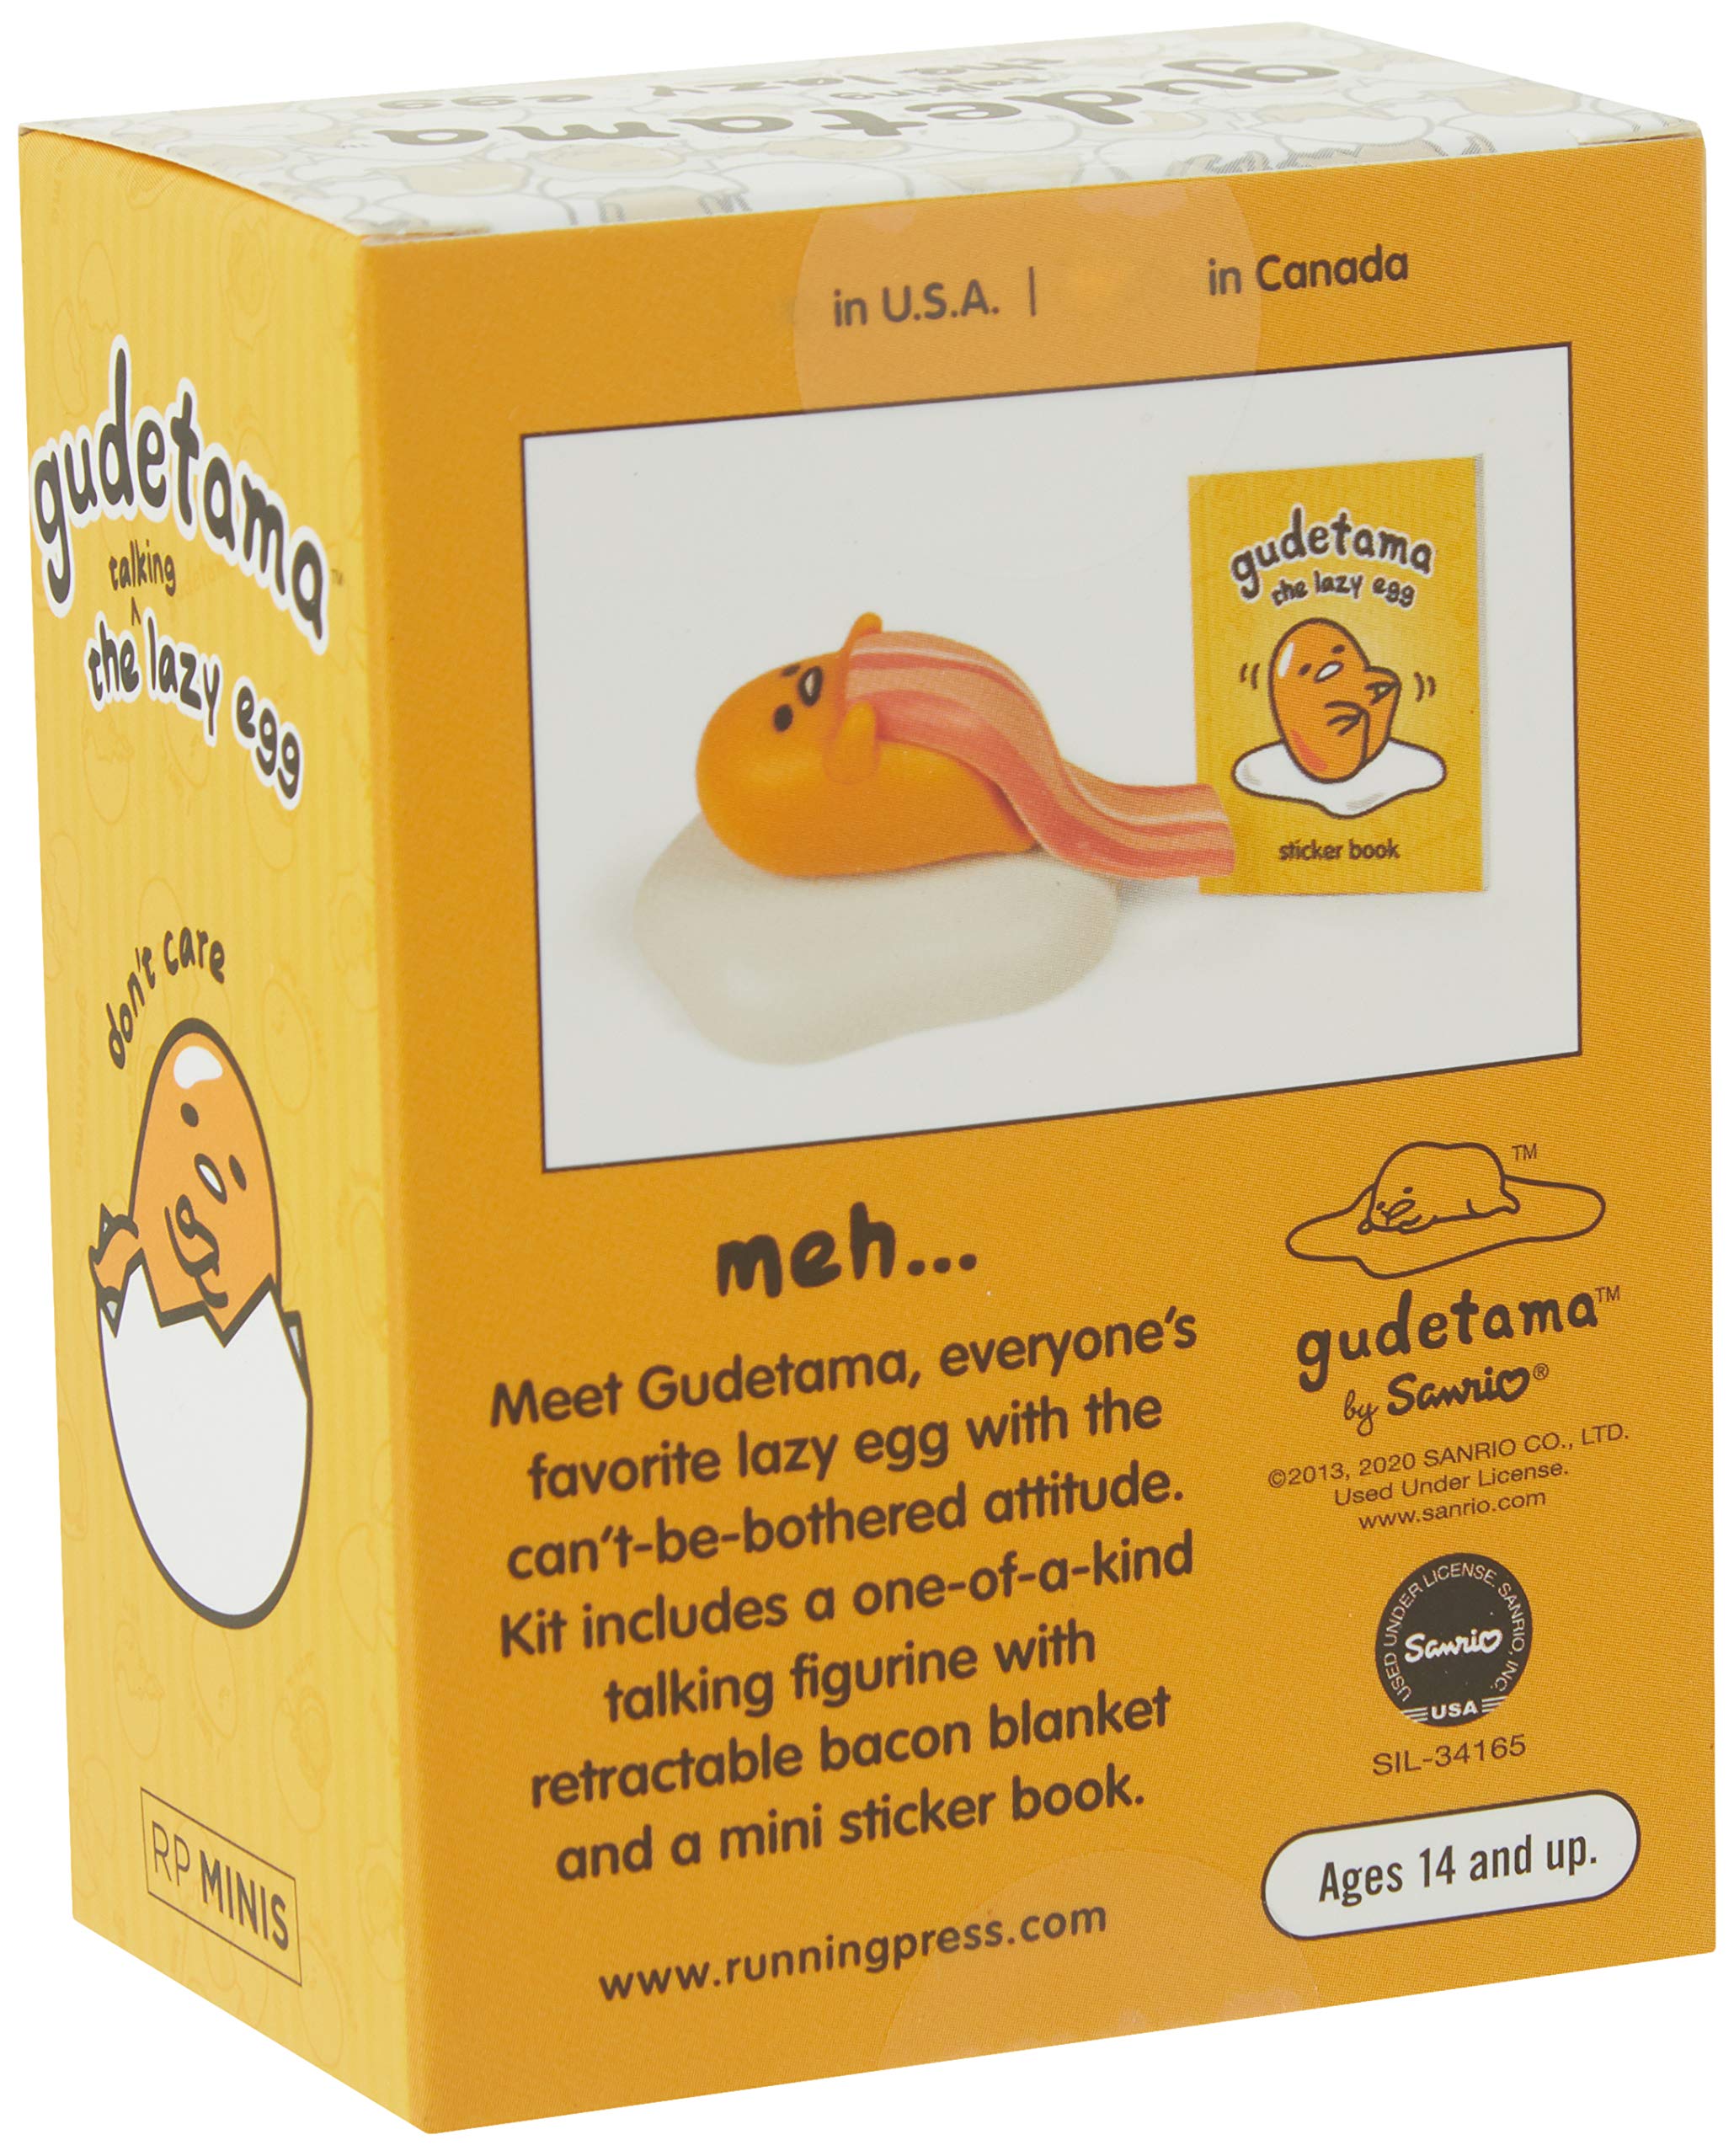 Gudetama: The Talking Lazy Egg (RP Minis) (Paperback)